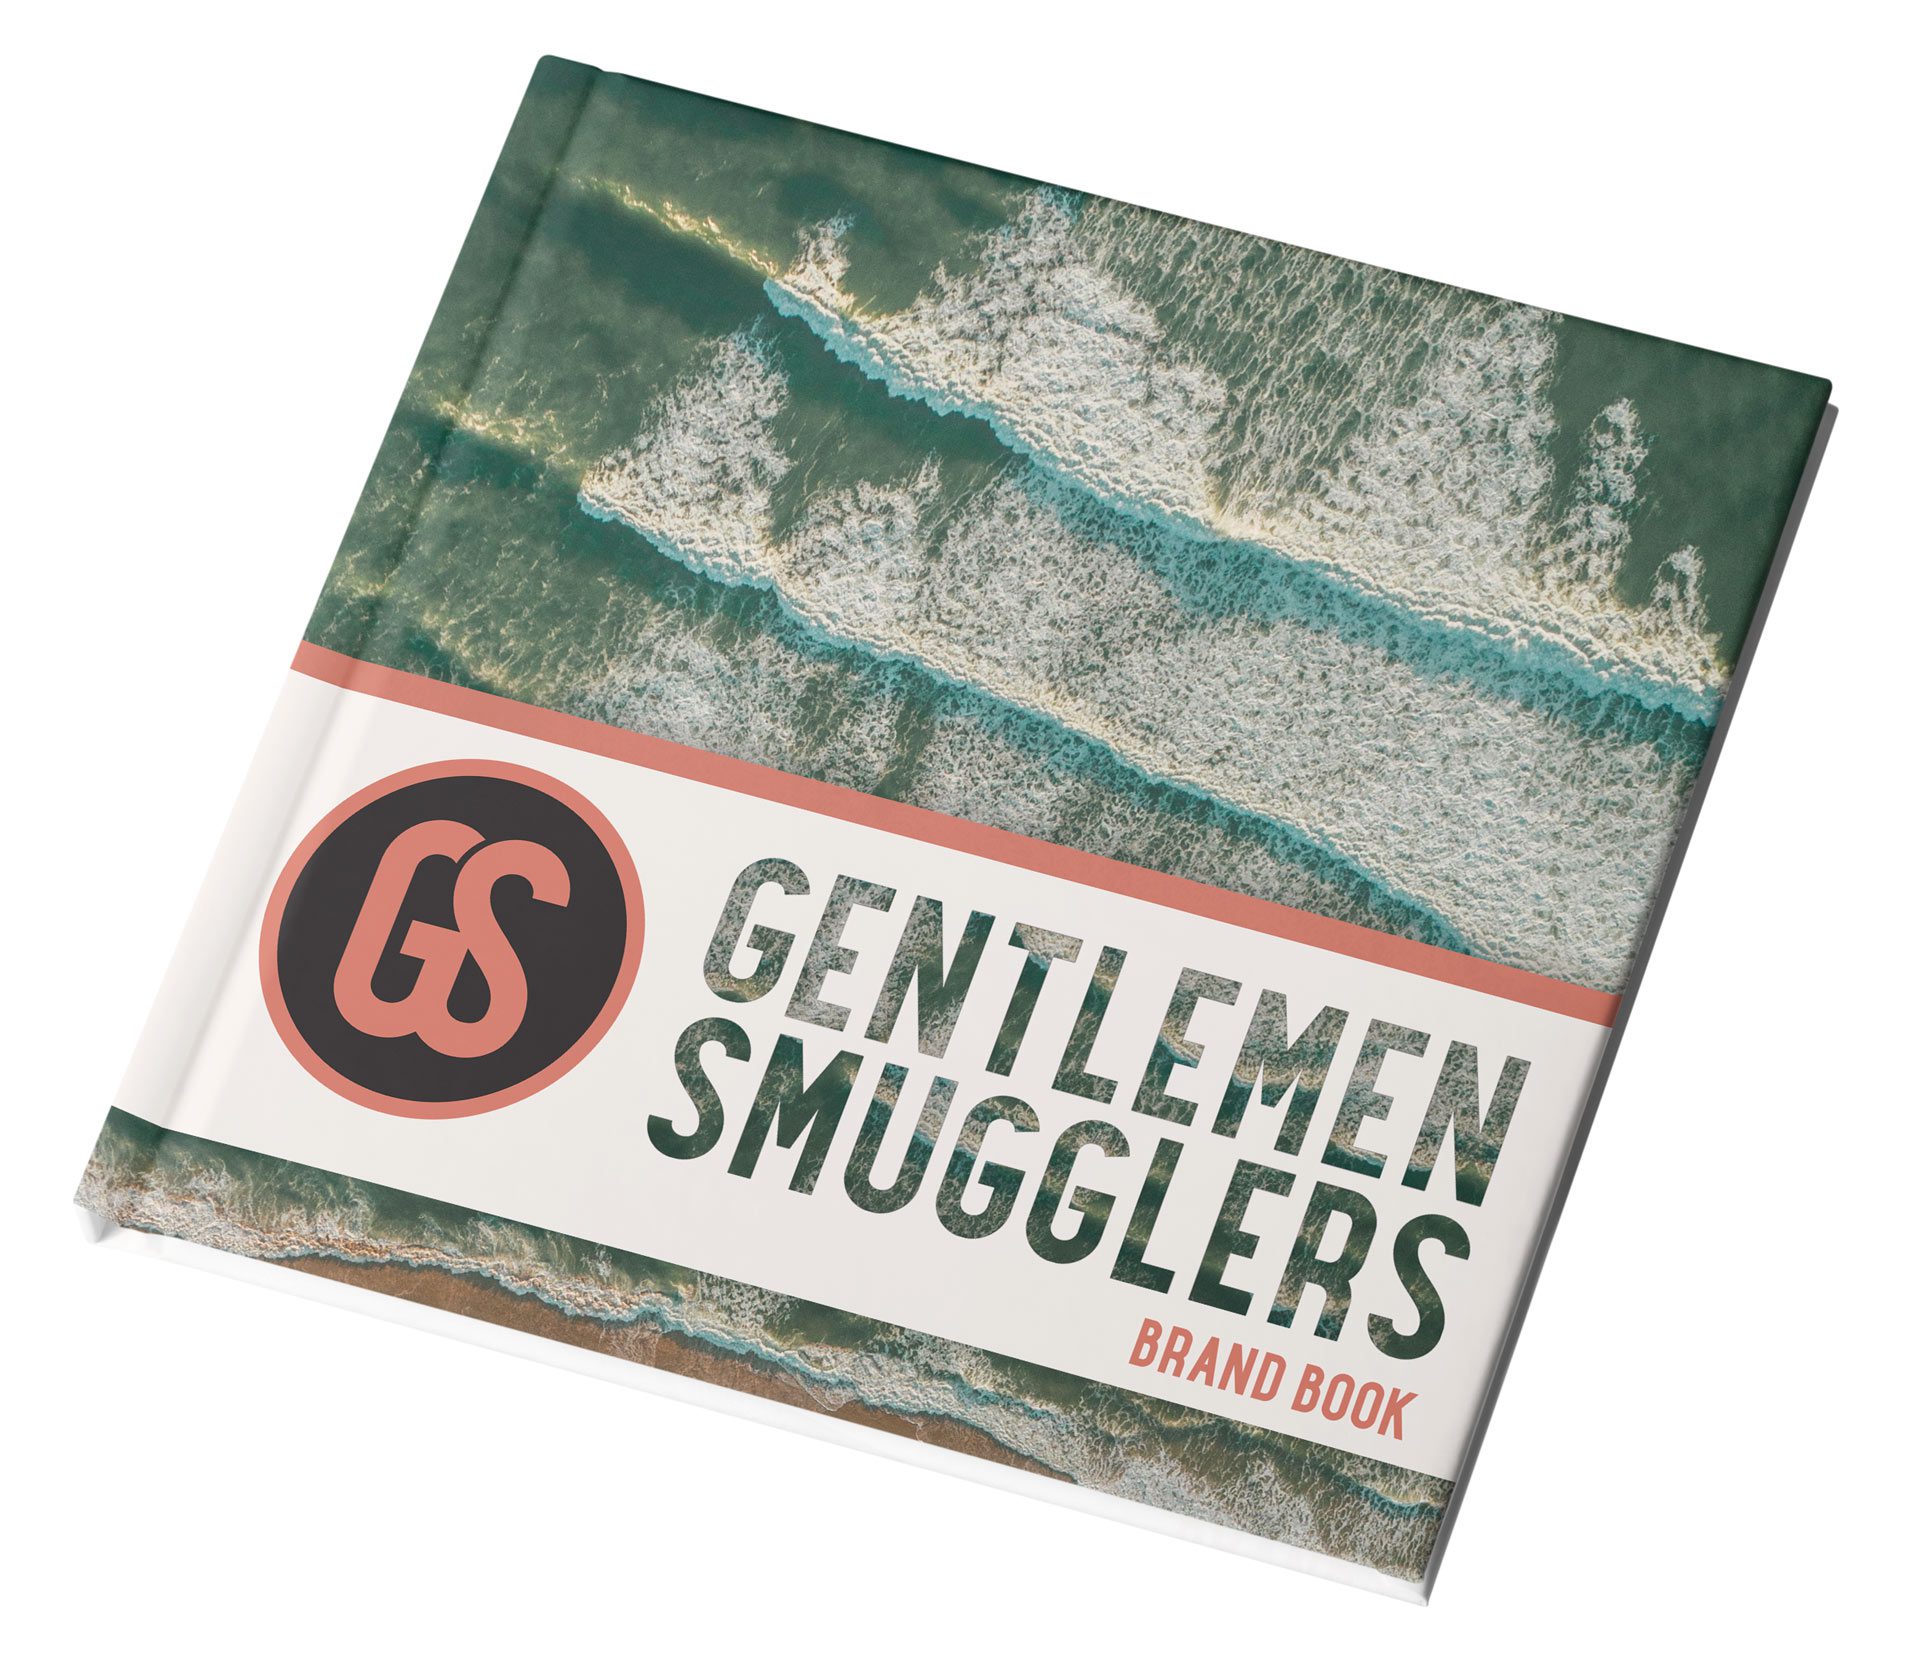 puf-creativ-our-work-gentlemen-smugglers-brand-book